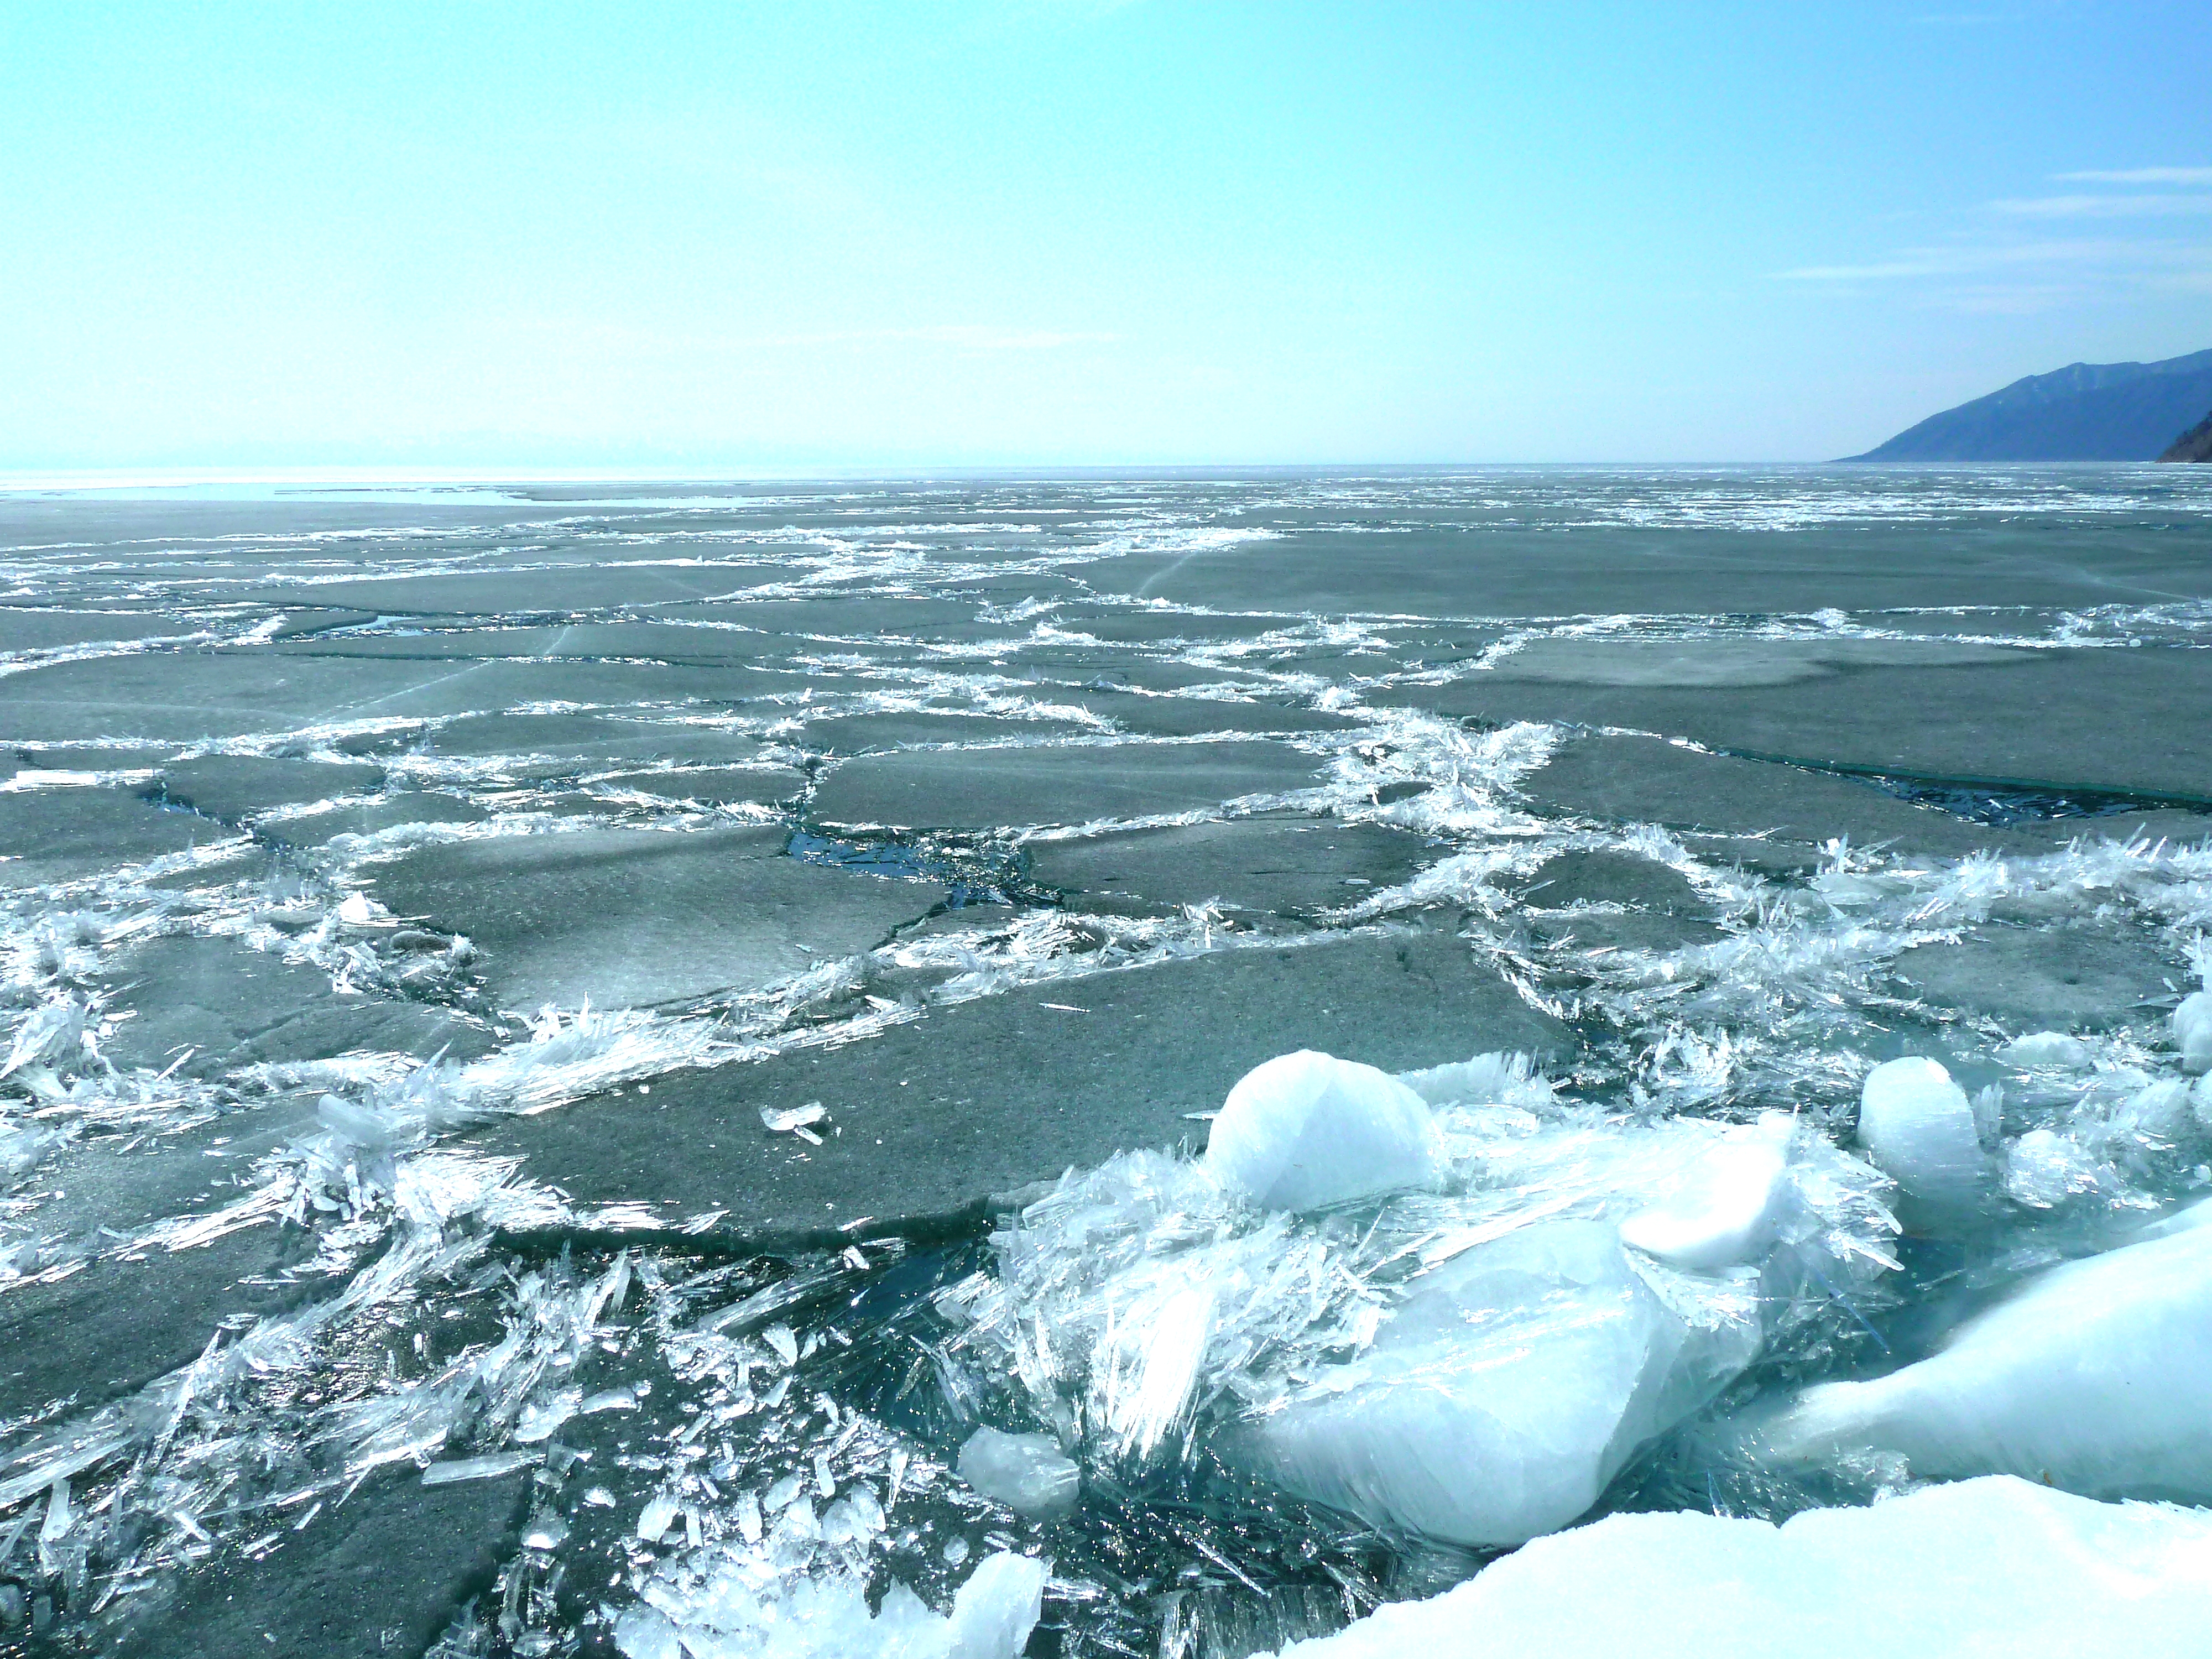 On the Baikal shore